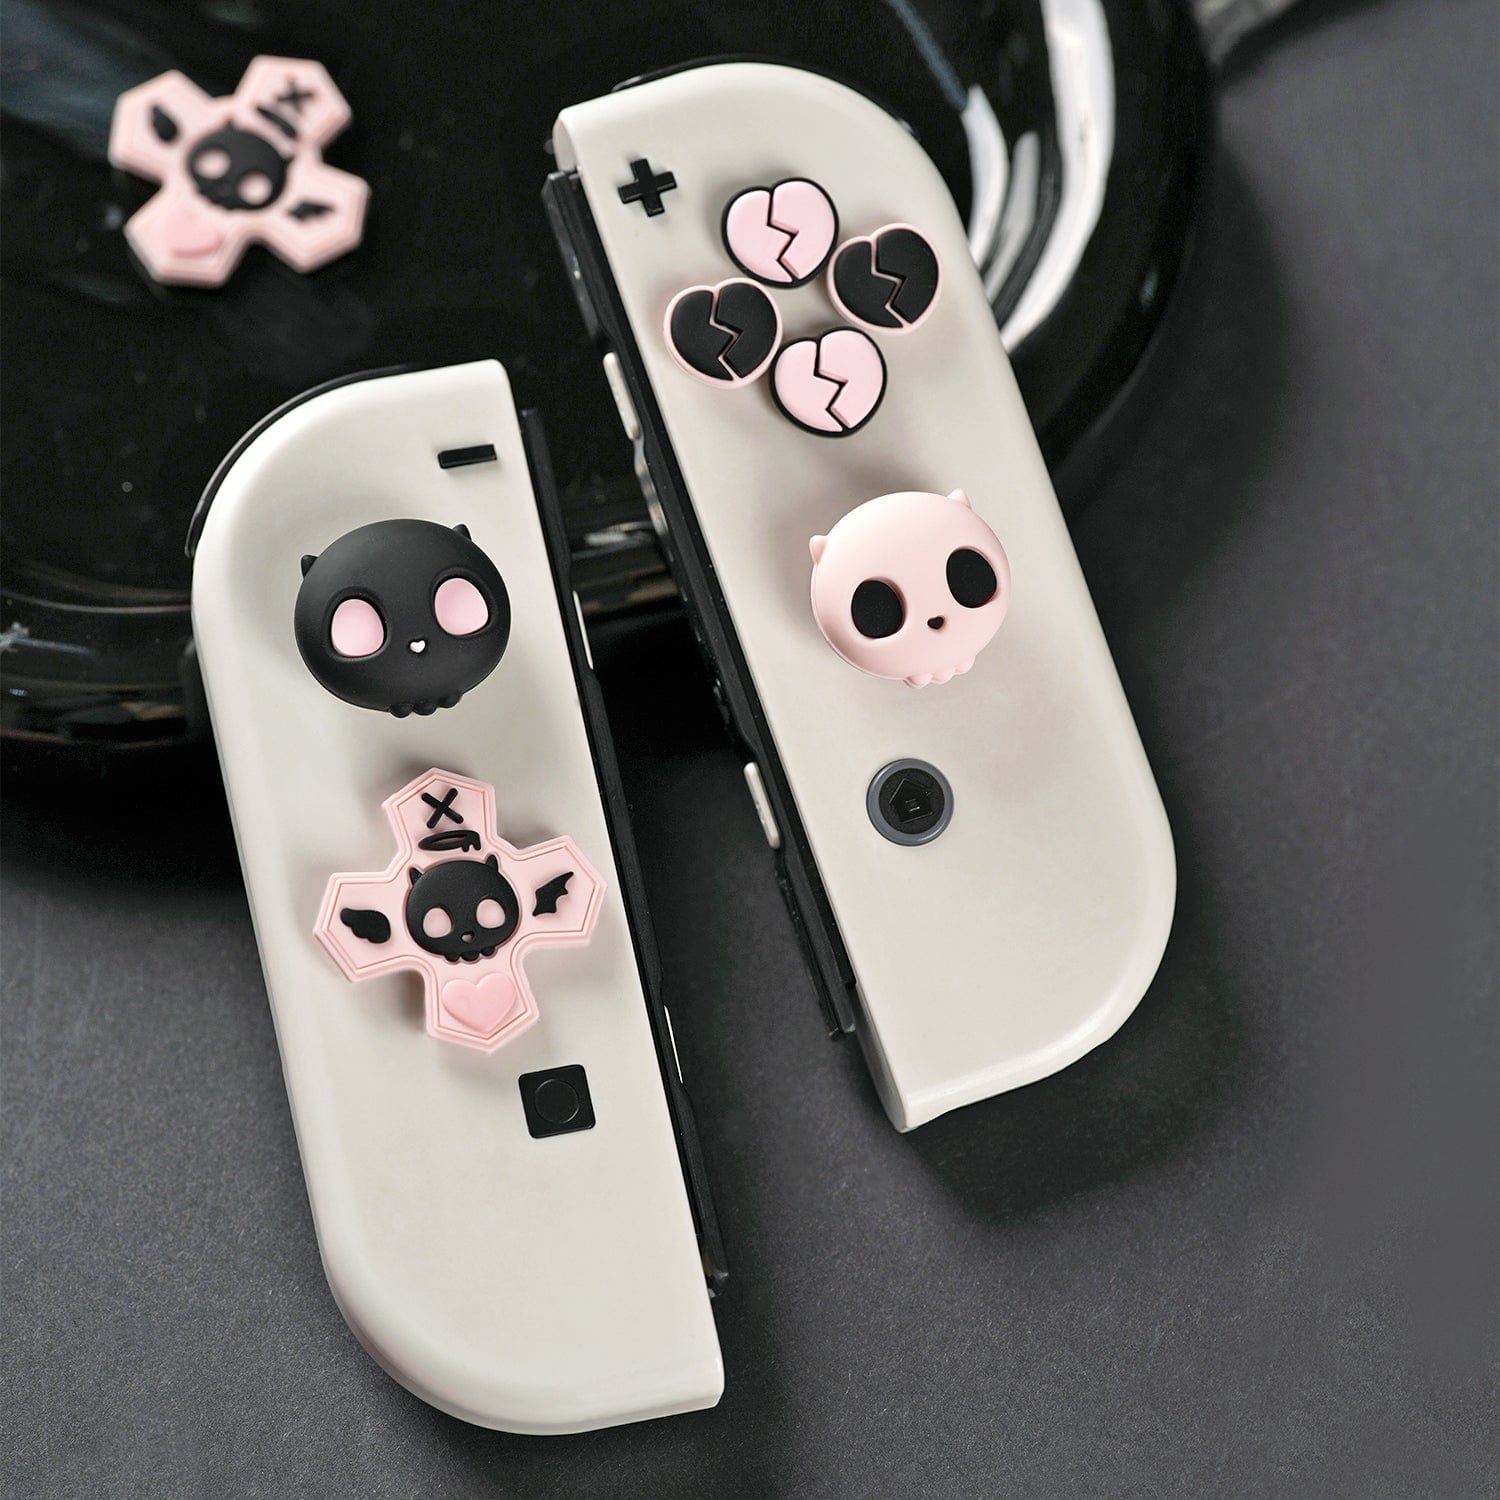 GeekShare Pink Skull Button Caps